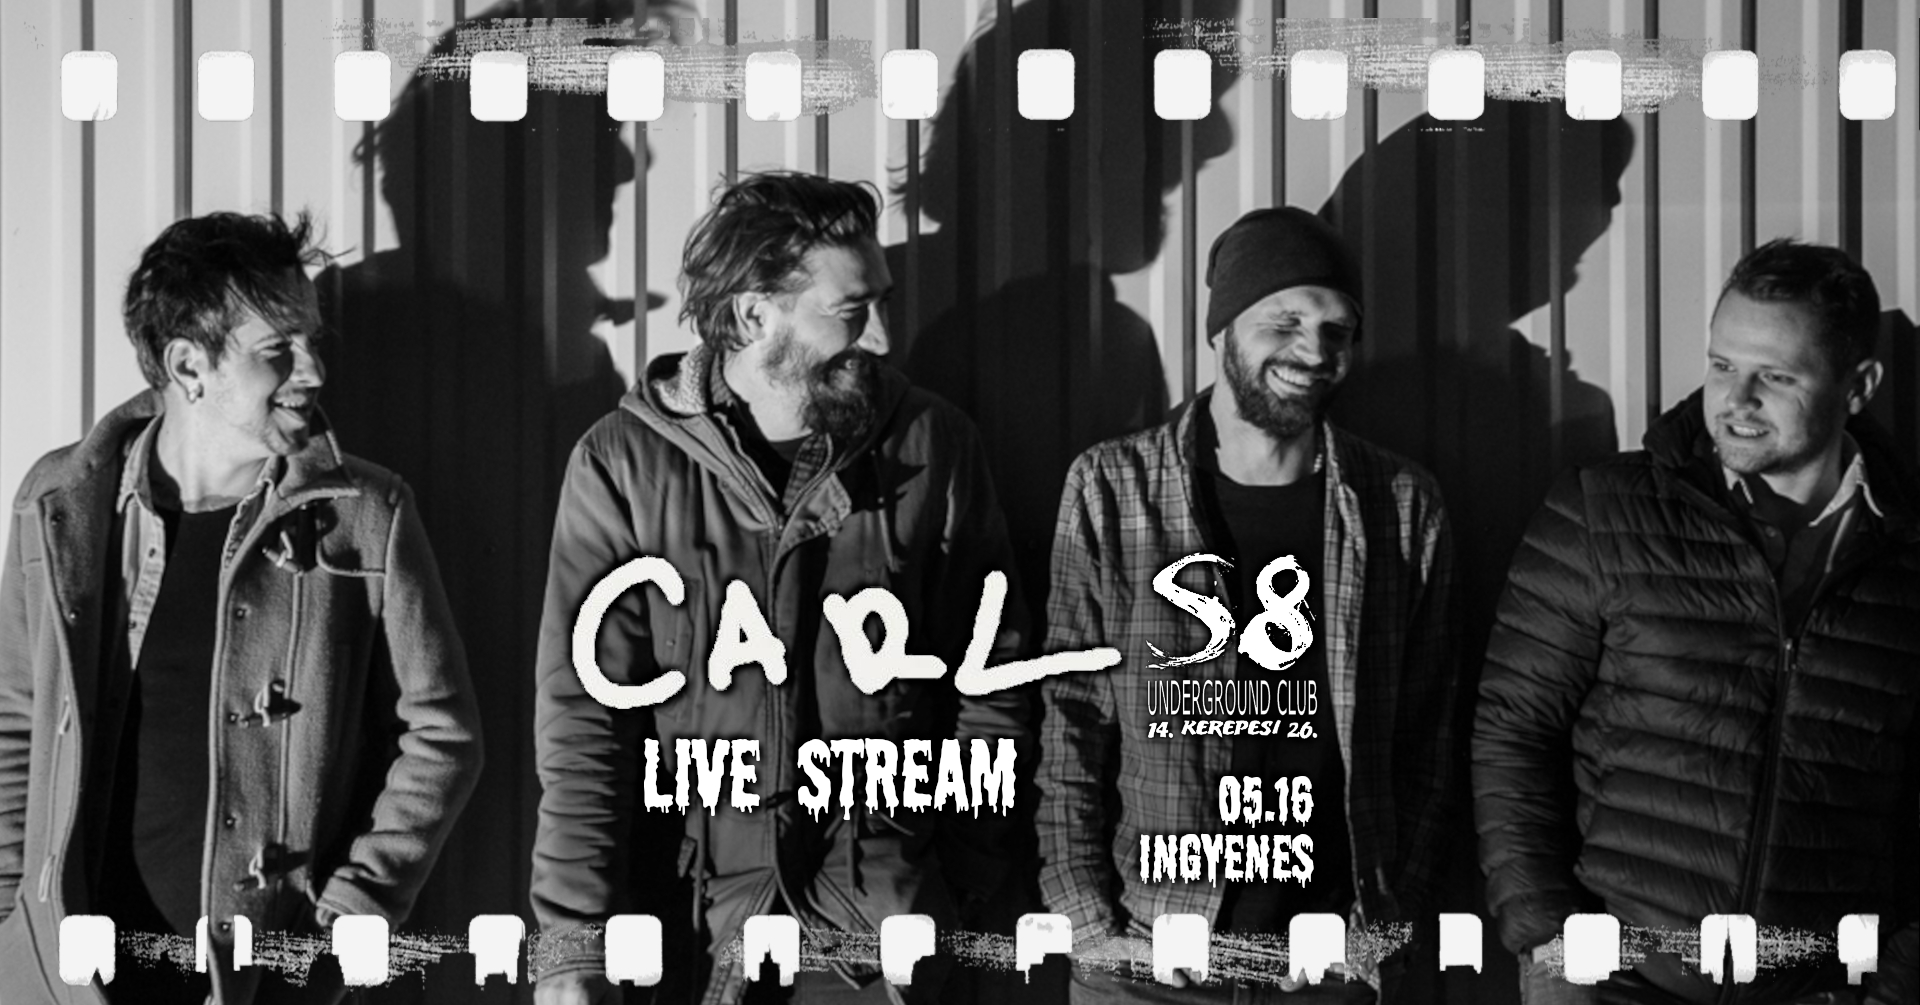 Carl Live Stream, S8 Underground Club, 16 May